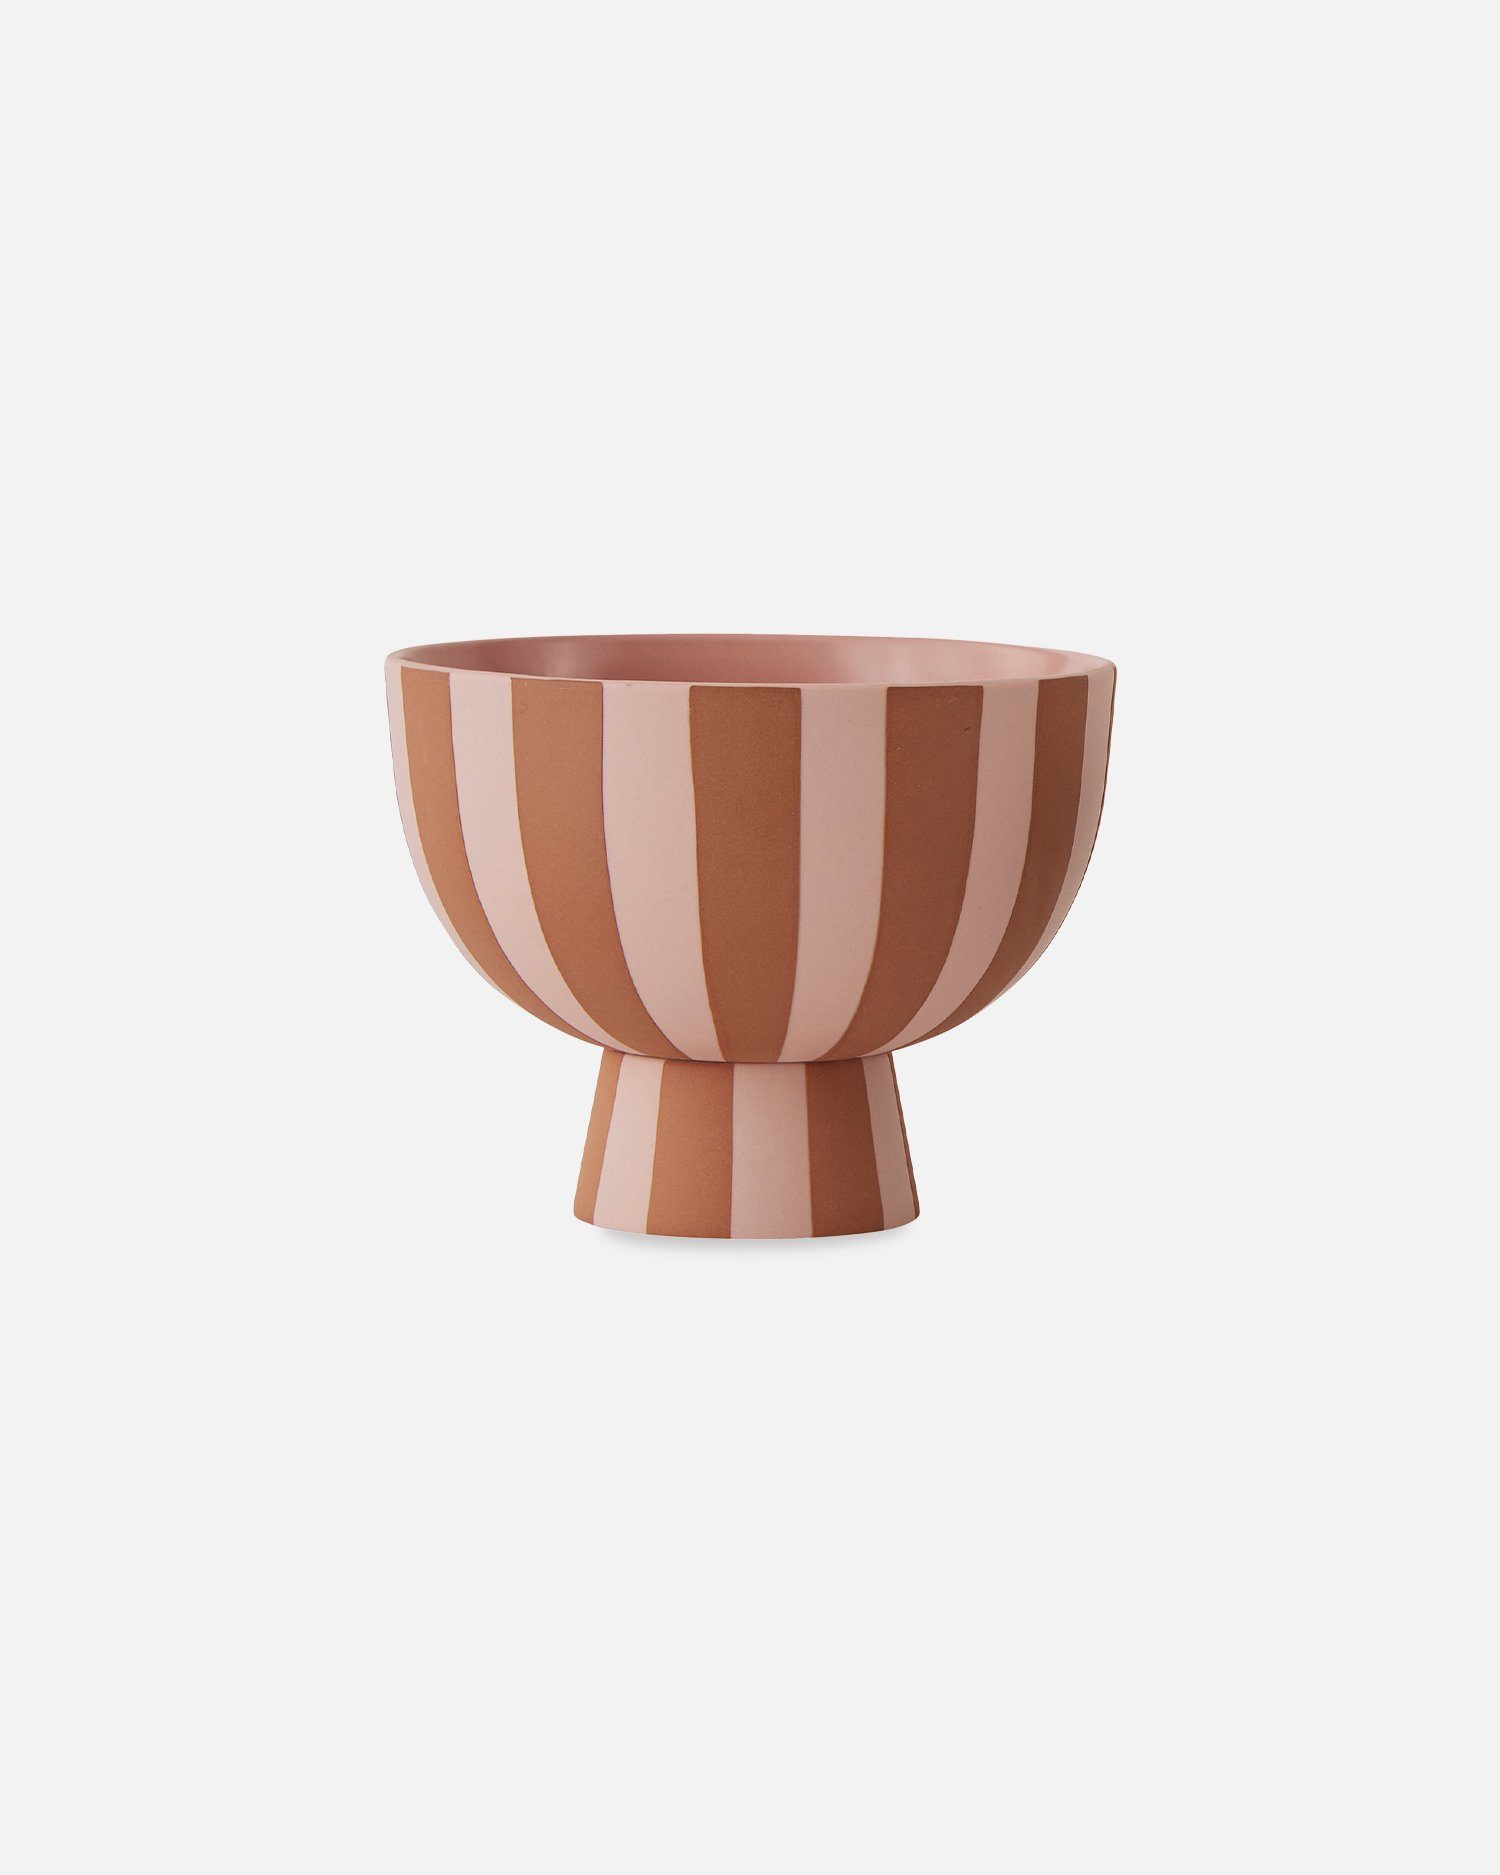 OYOY Dekoschüssel Toppu Mini Bowl Dekoschale Gestreift aus Keramik - Ø12 x H10cm, Karamell/Rosa